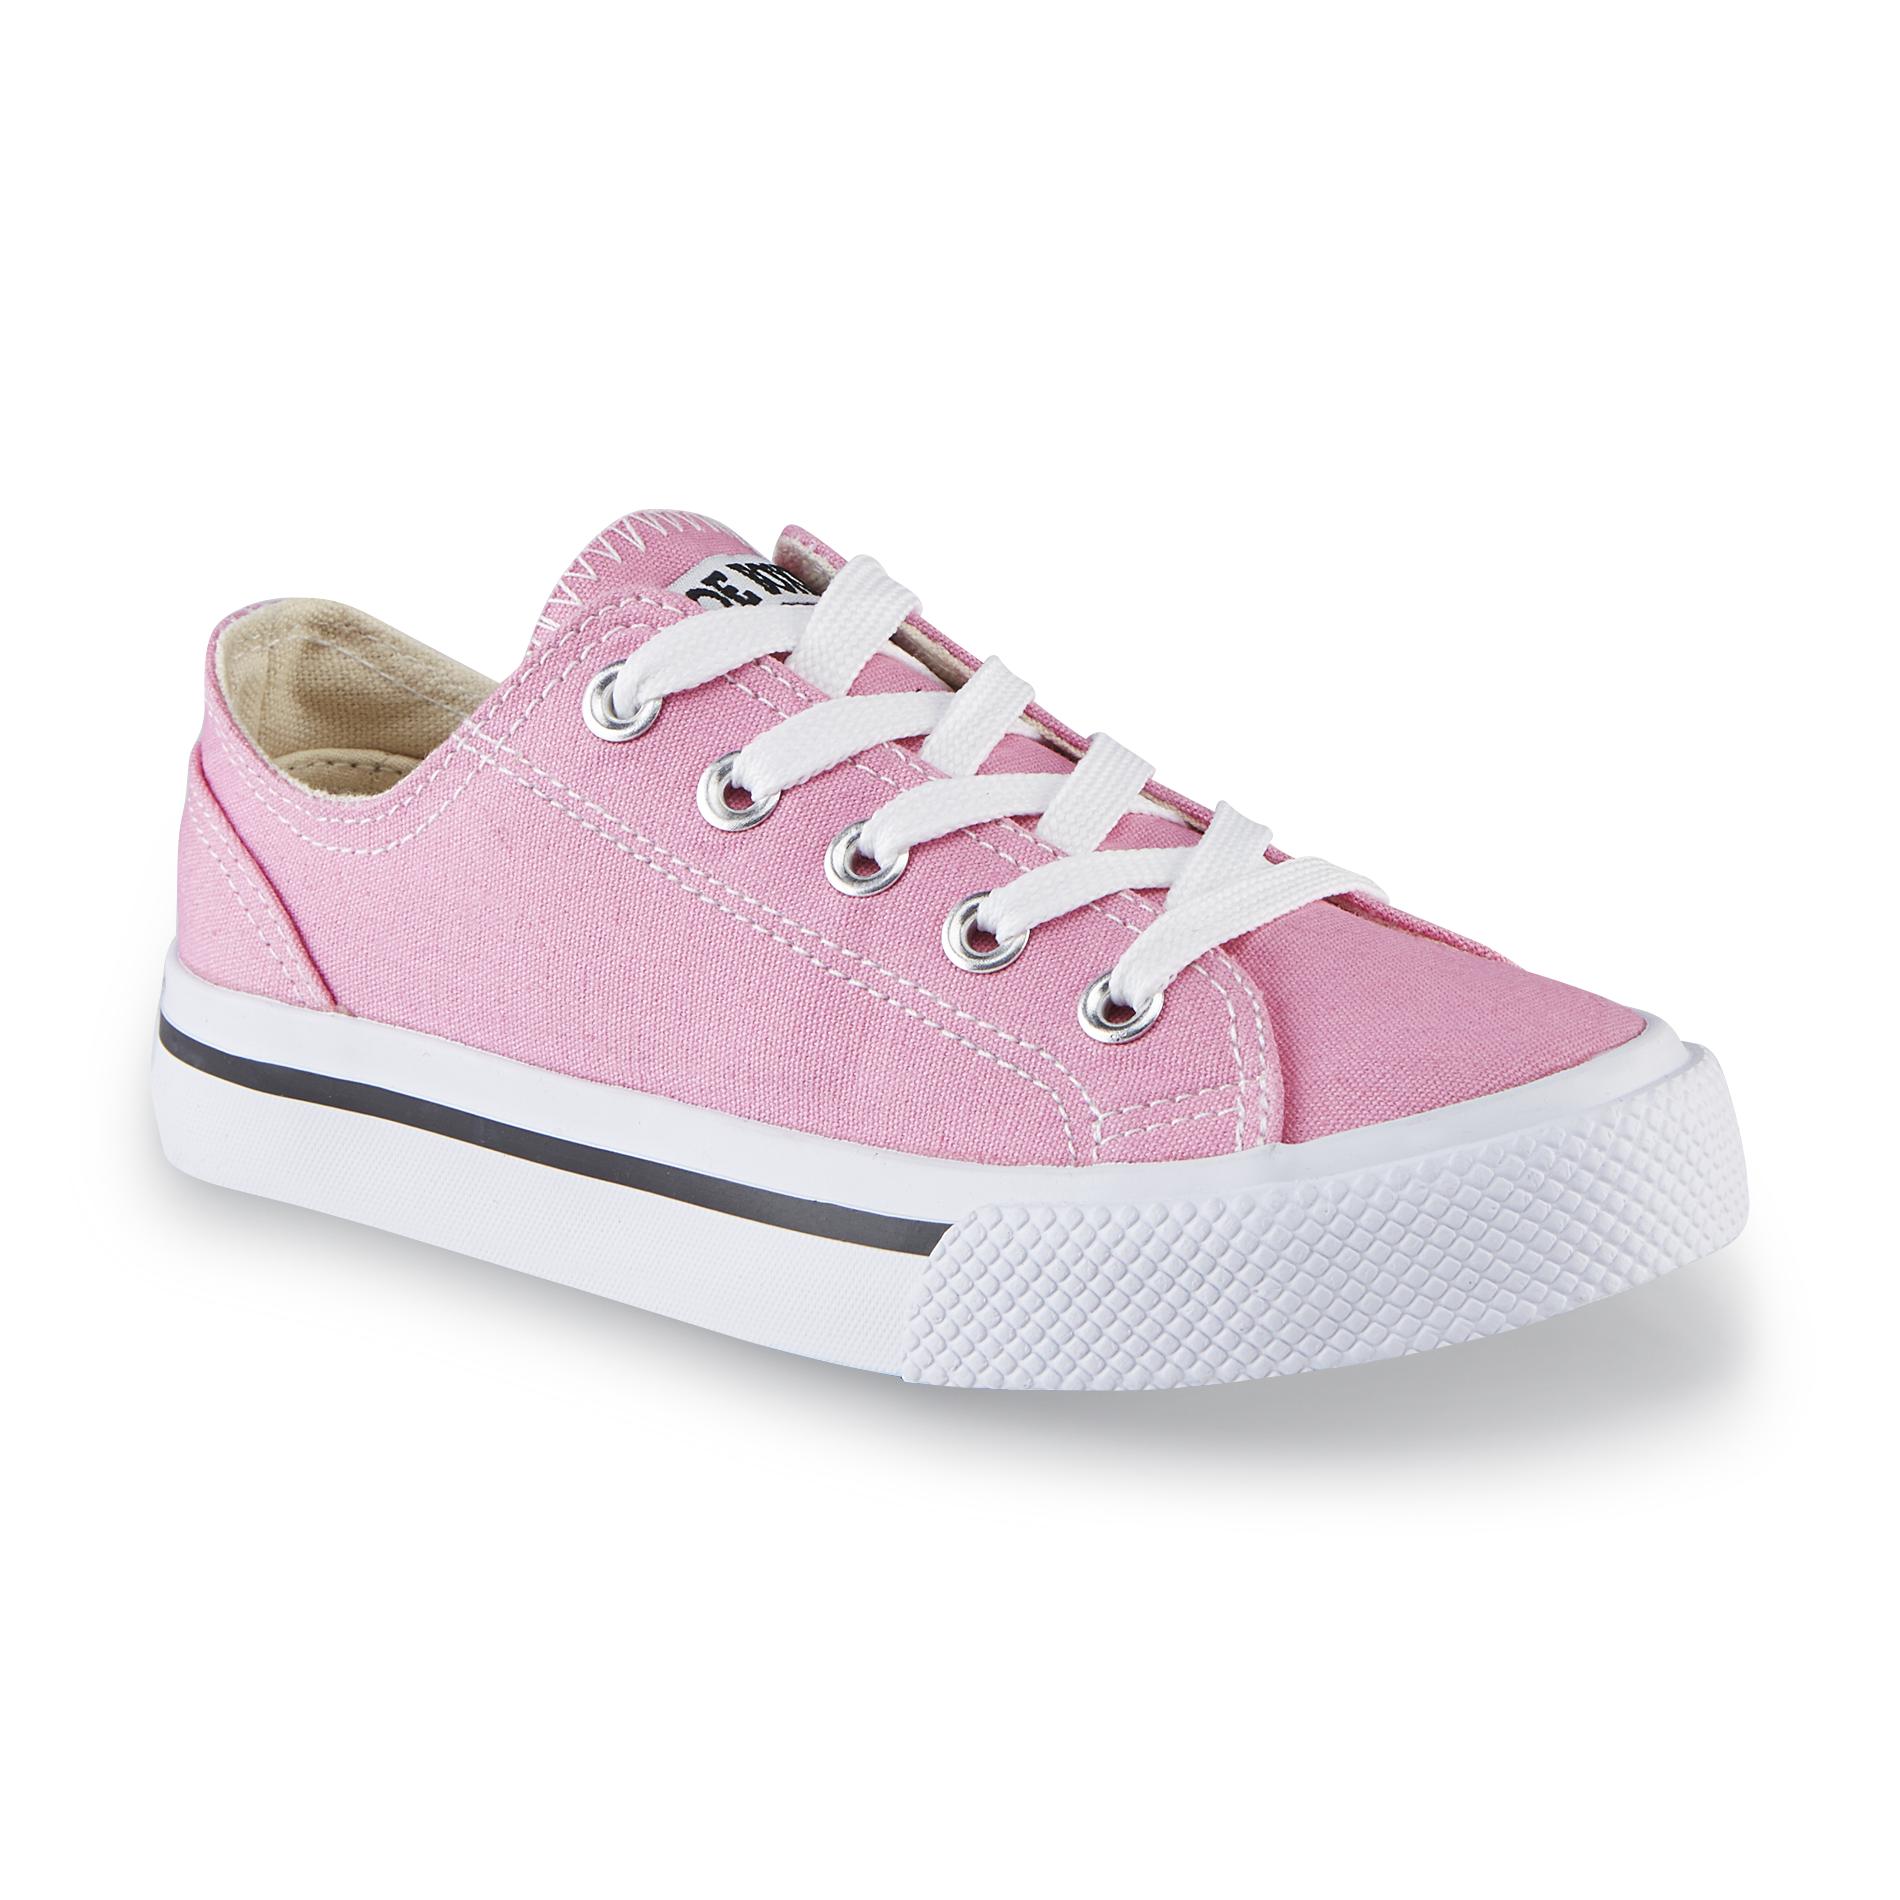 Joe Boxer Girl's Mya Pink/White Sneaker